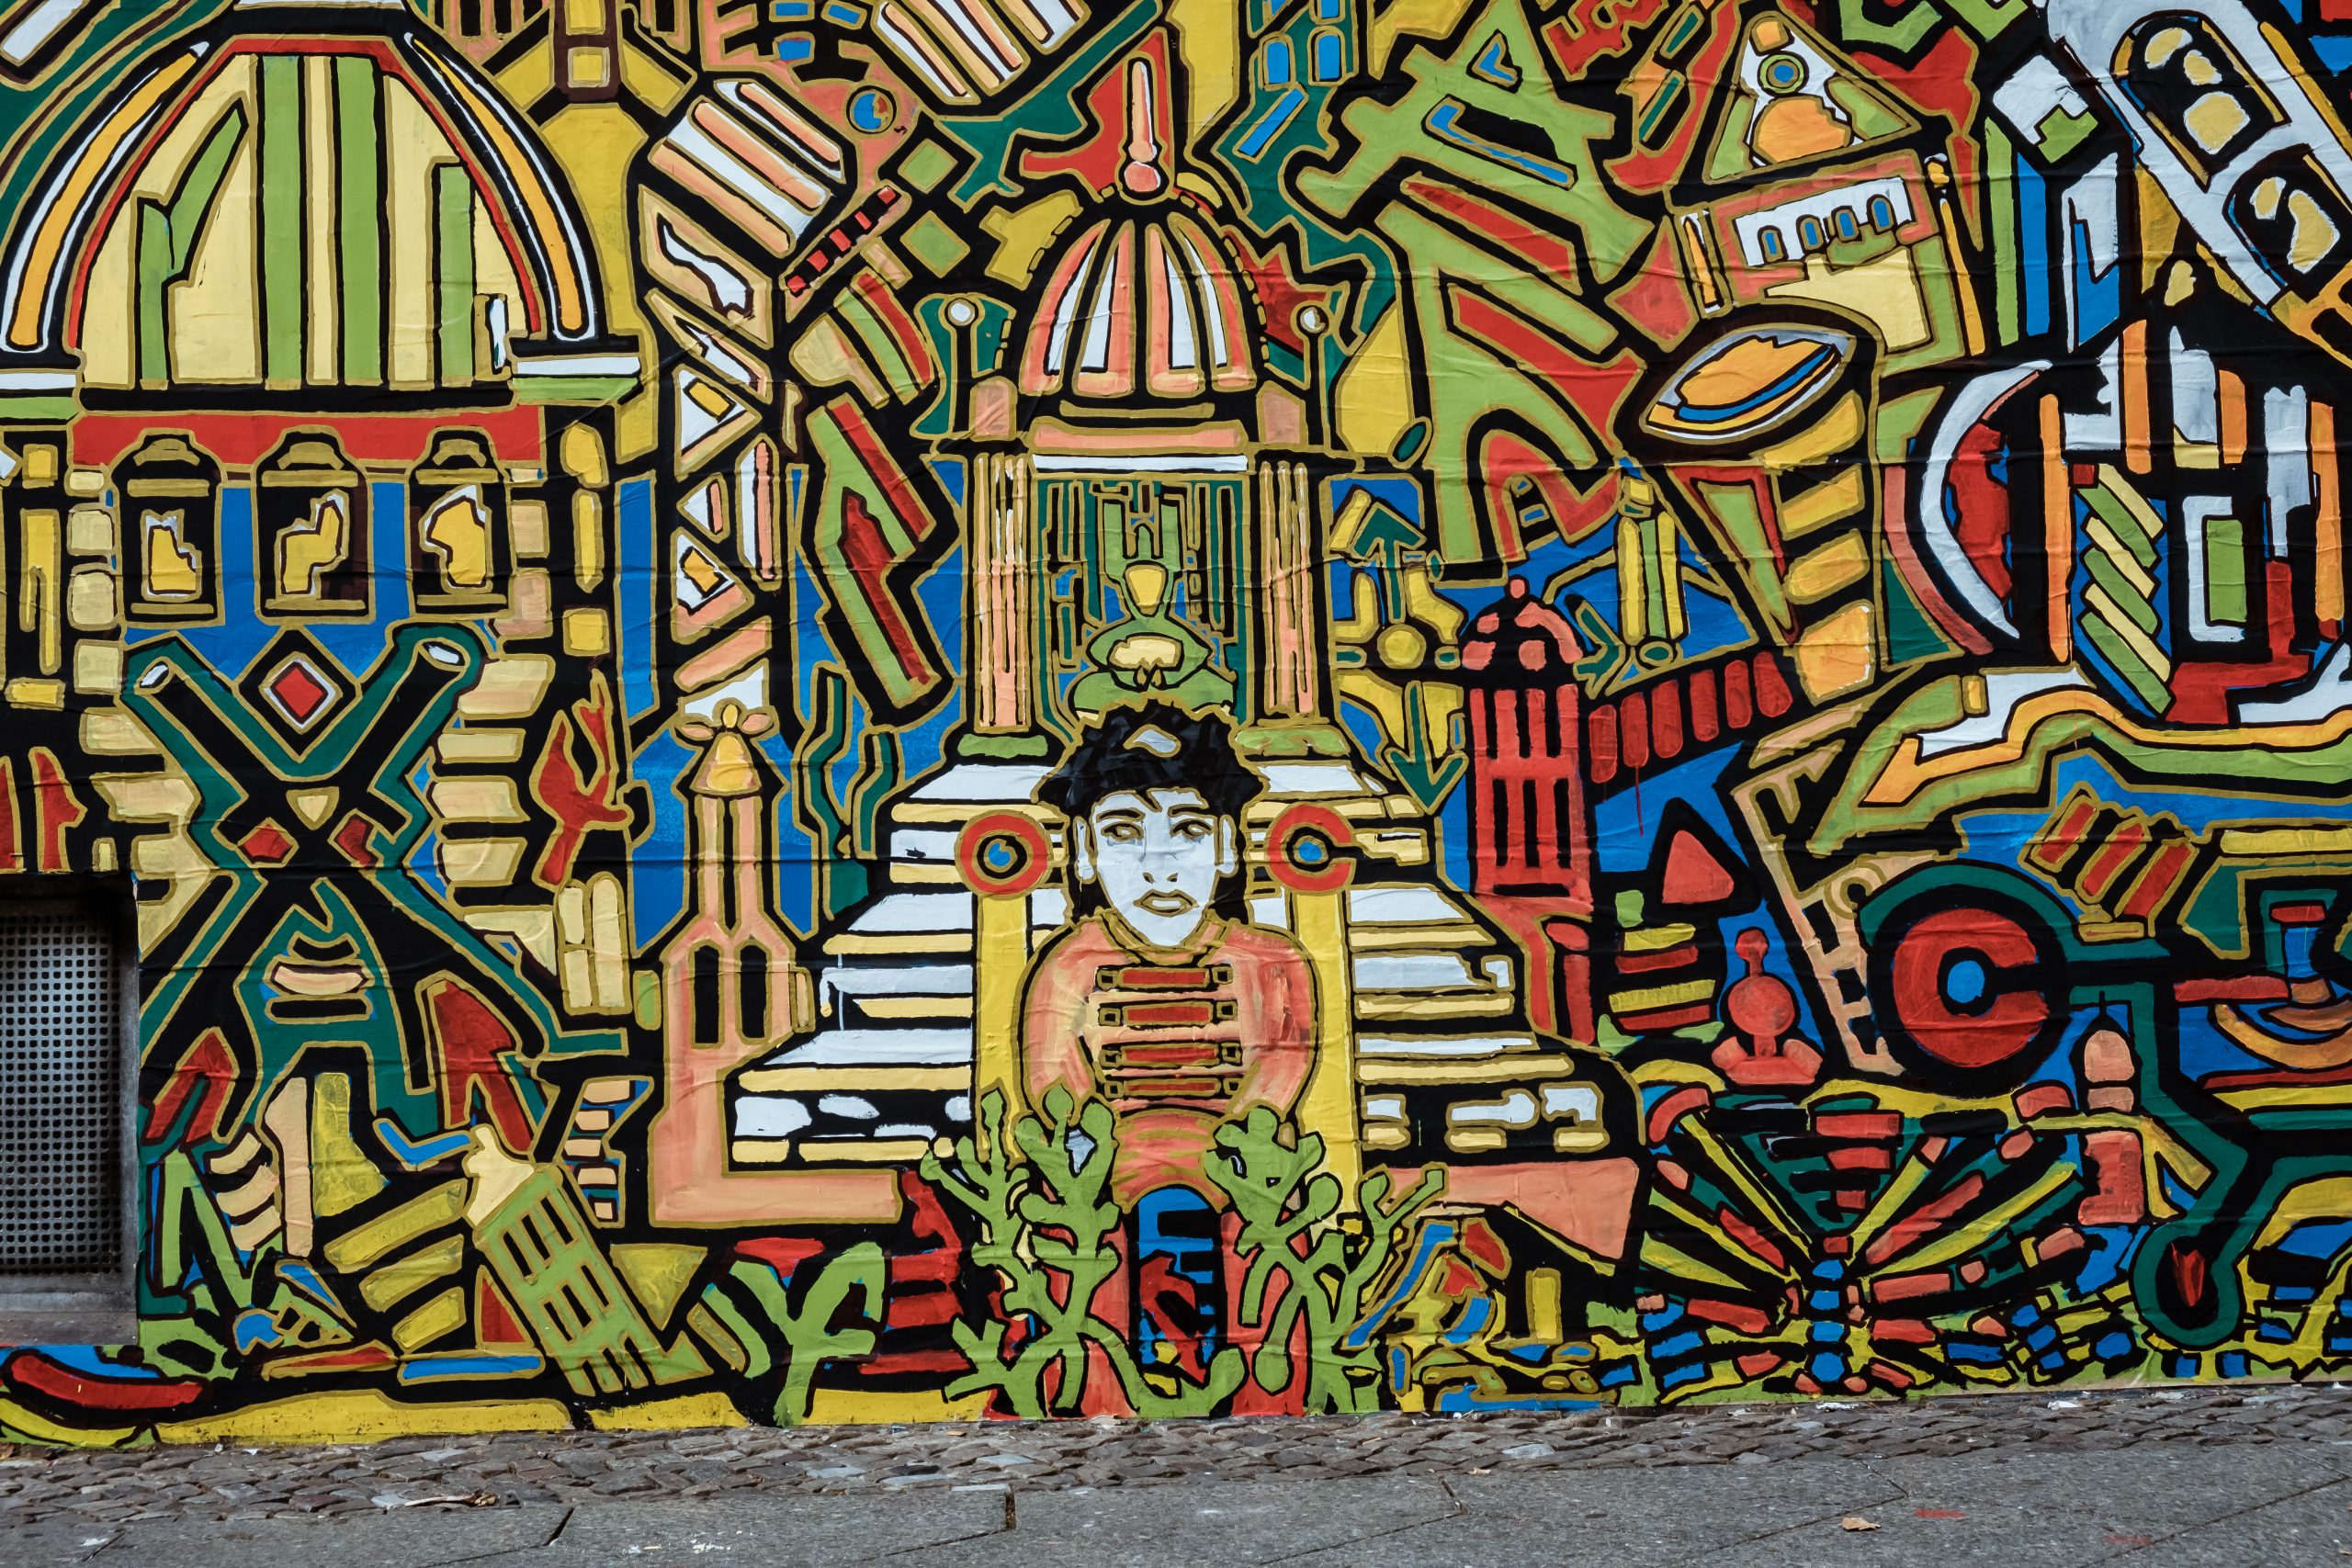 YAP_Community Wall_Mural_URBAN NATION_Berlin_Peter Missing_02